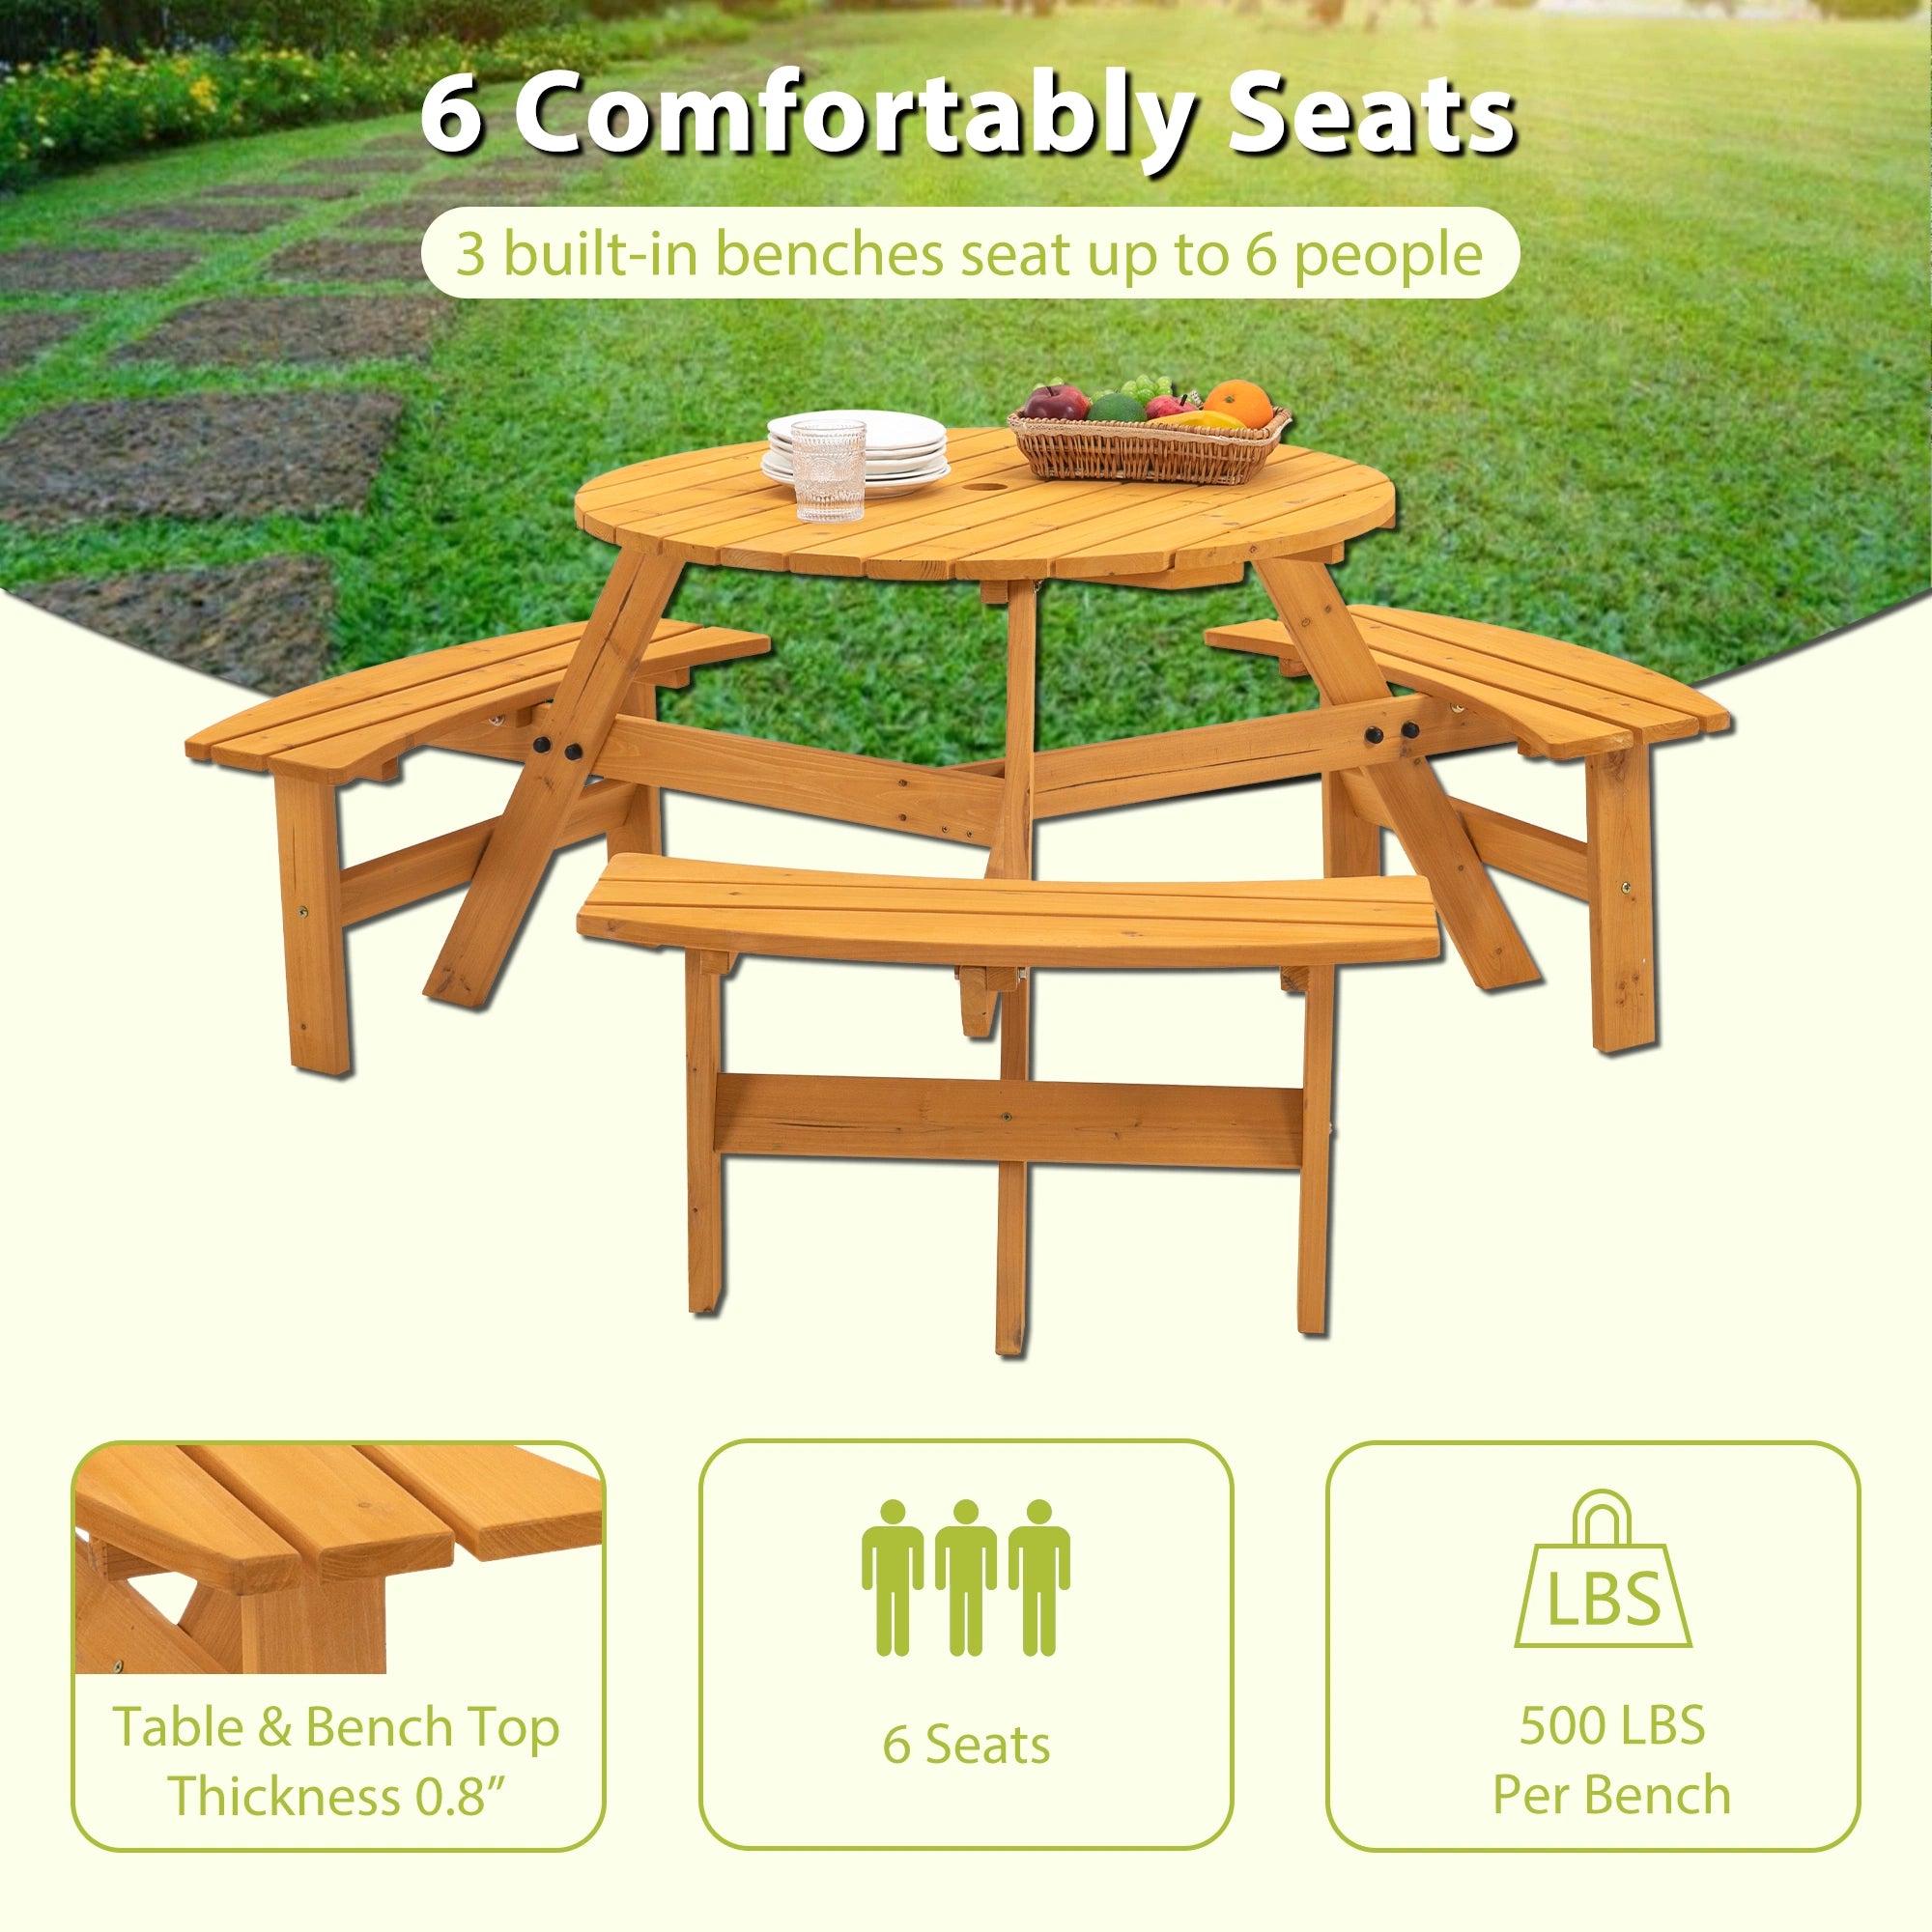 Circular Outdoor Wooden Picnic Table with Built-in Benches for Patio Backyard Garden